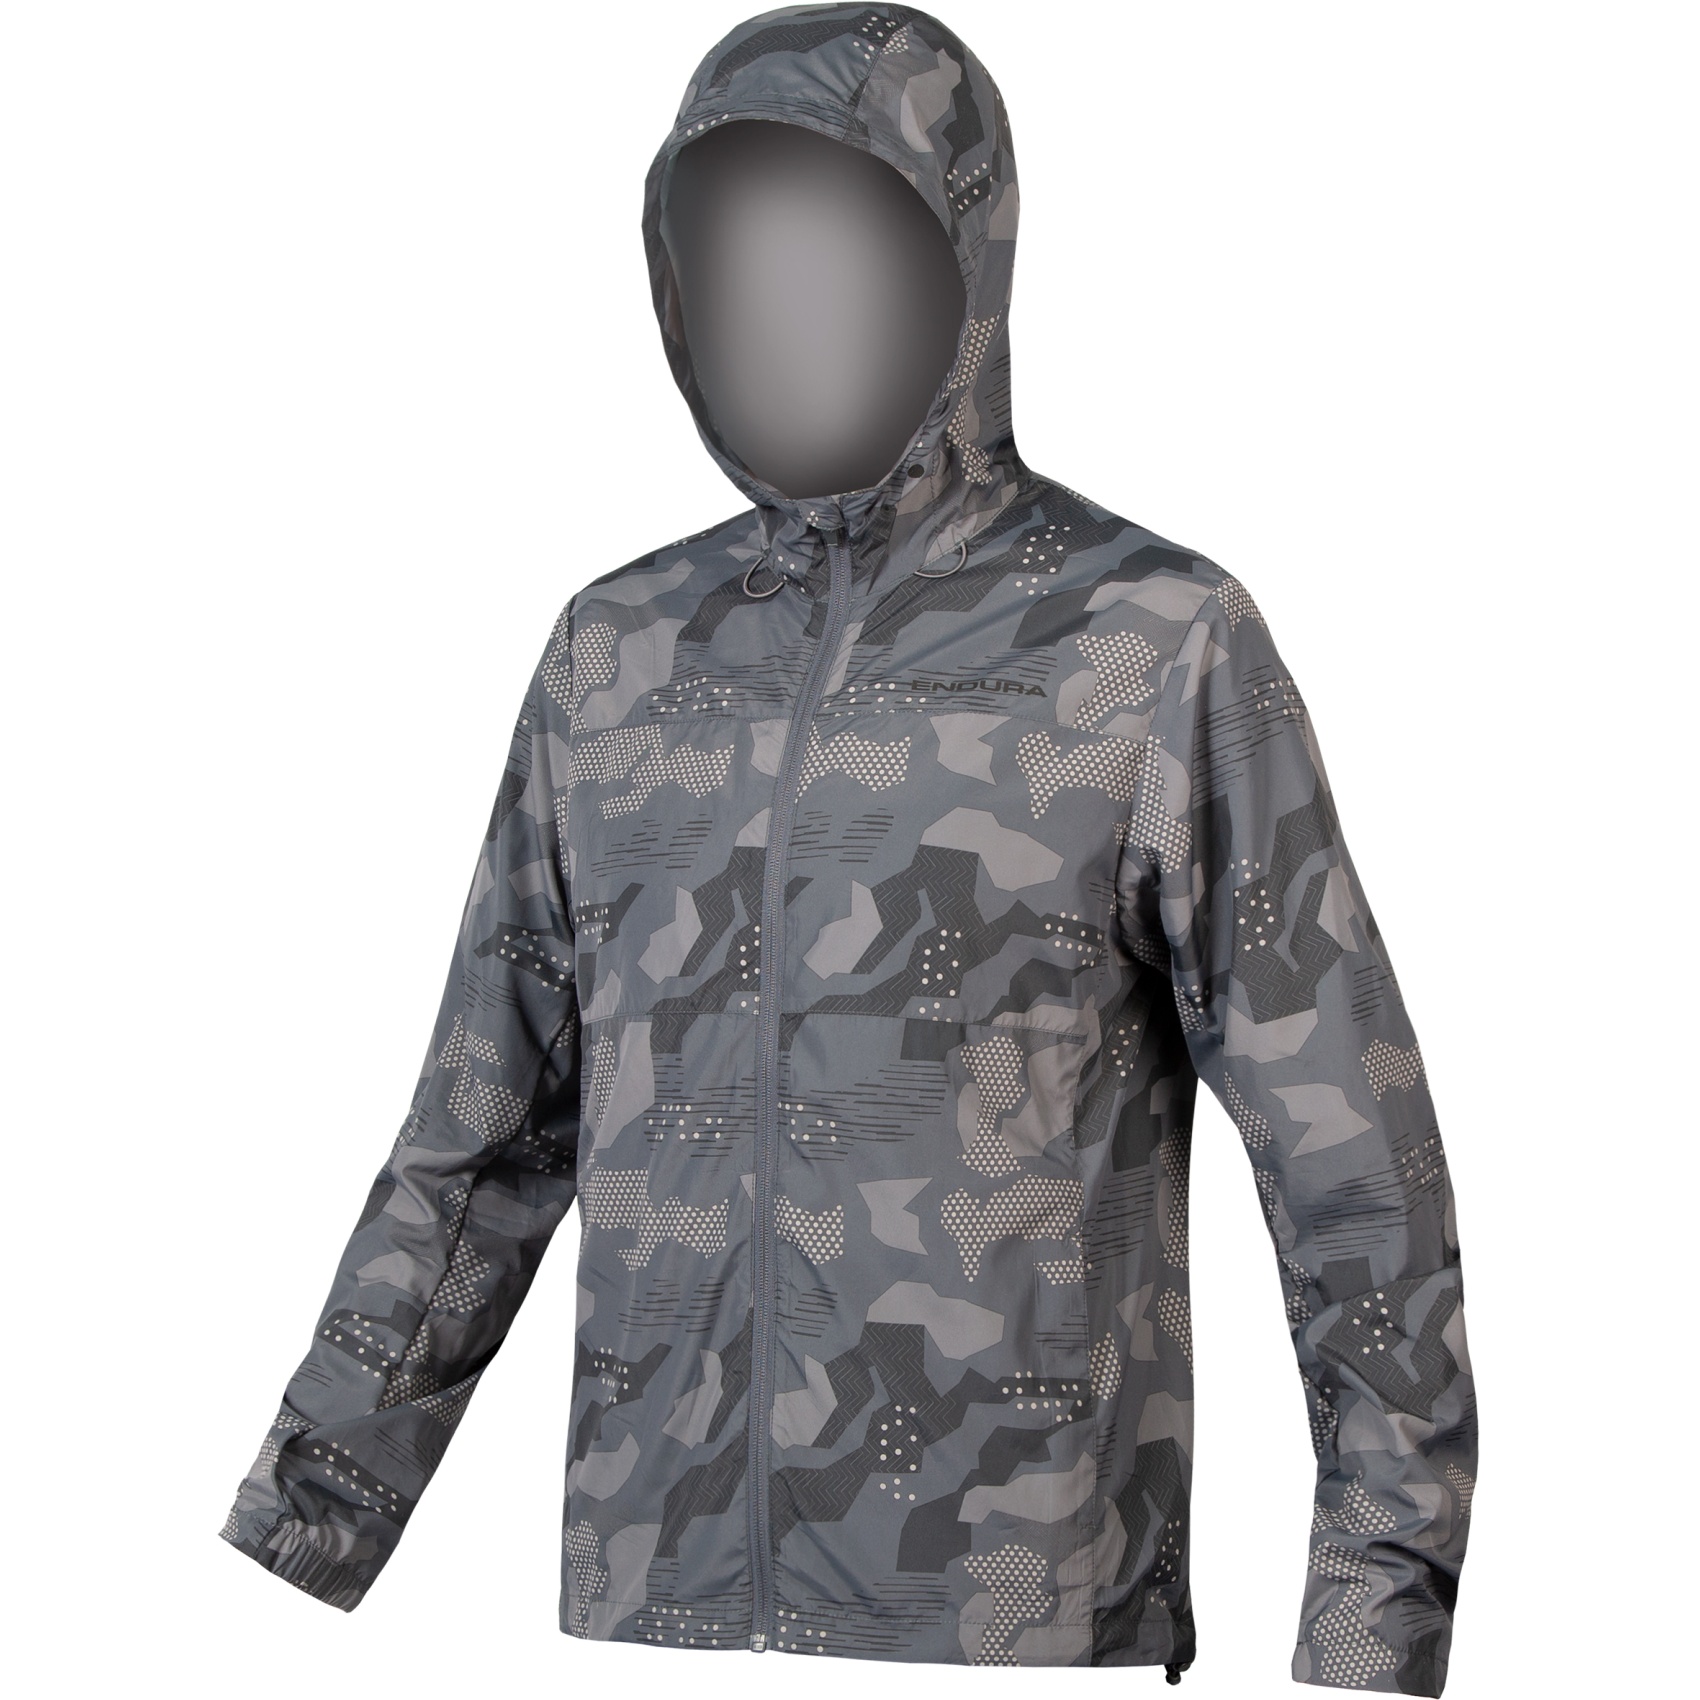 Produktbild von Endura Hummvee Windproof Shell Jacke - camouflage grau